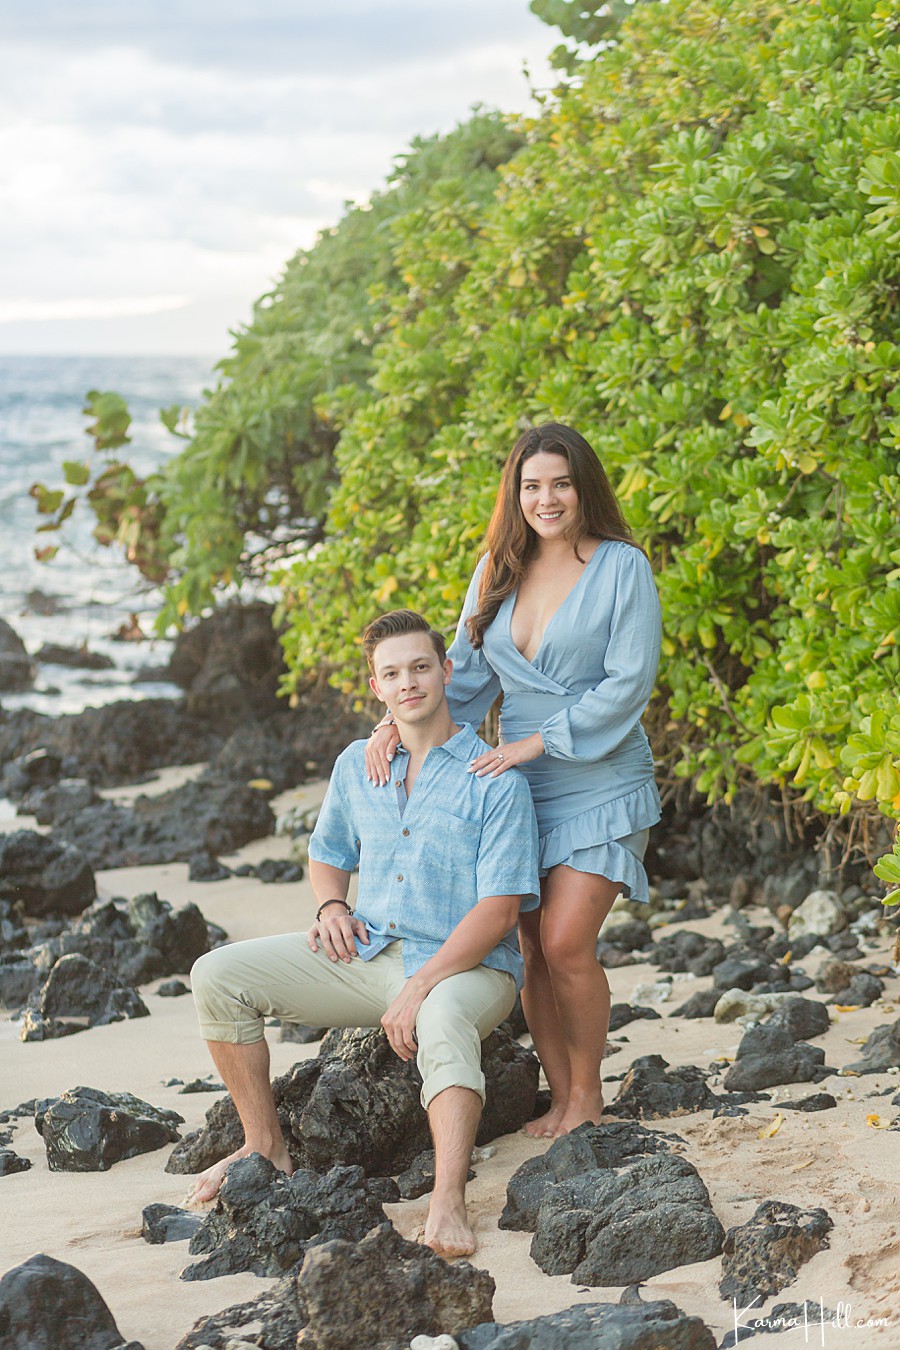 photographers in Maui, Hawaii
